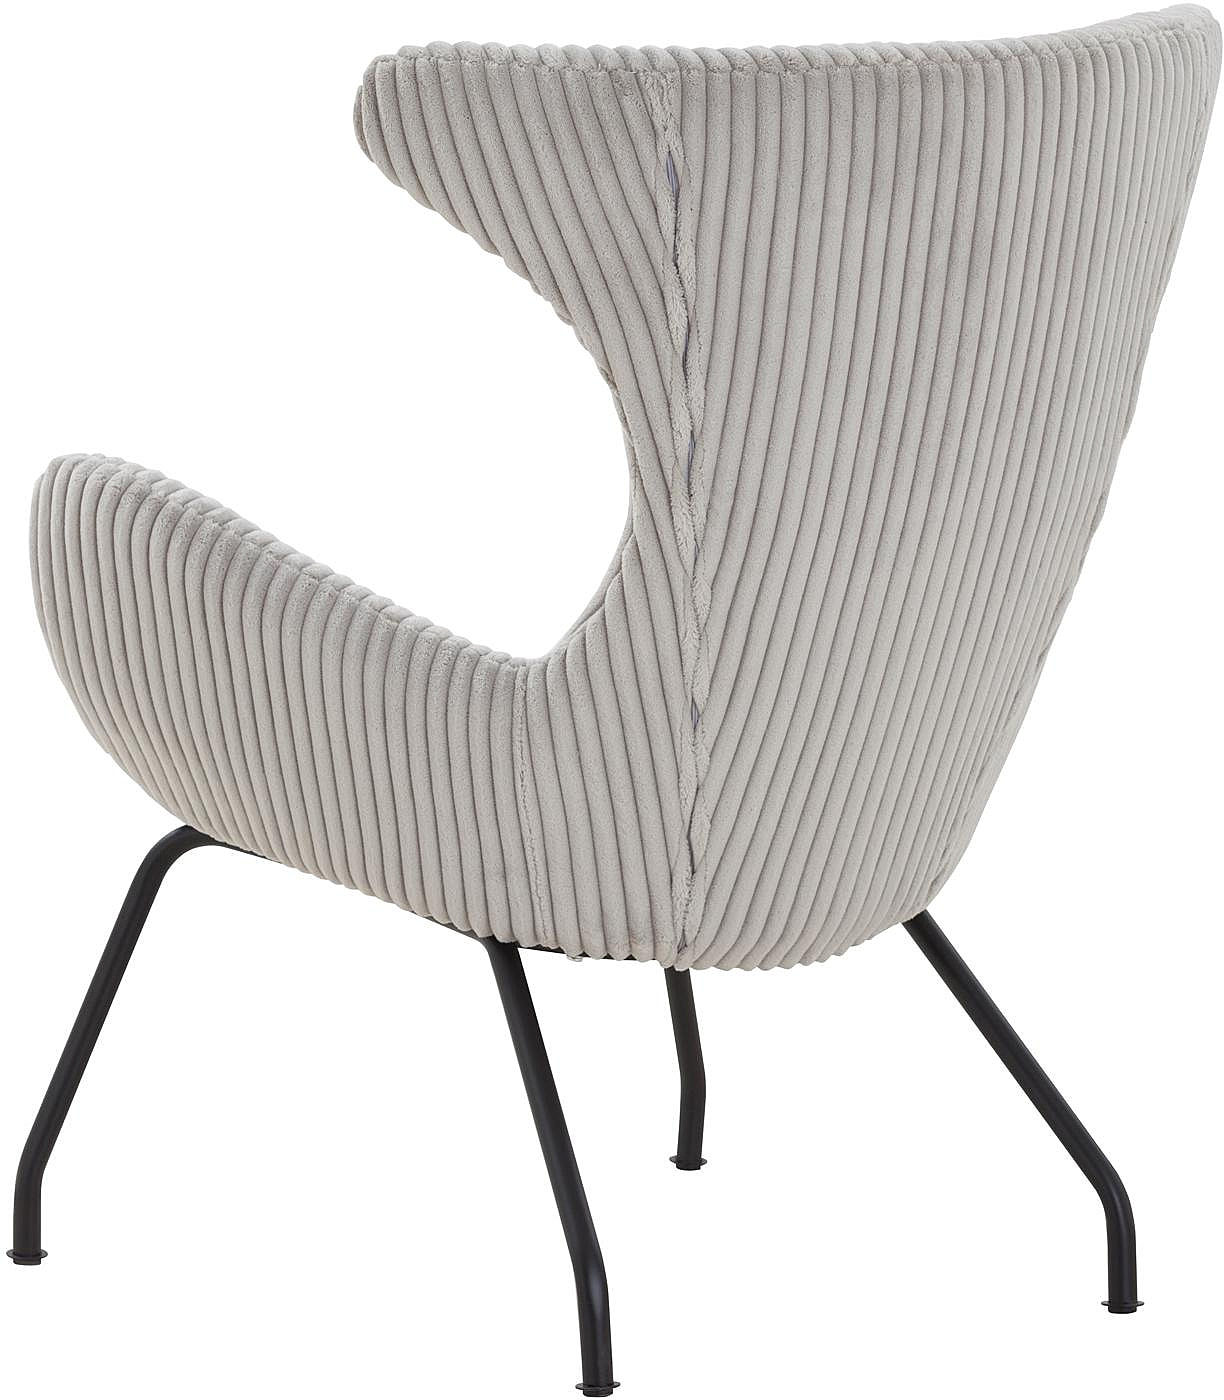 SalesFever Relaxsessel Sessel mit Grau Texturstoff in